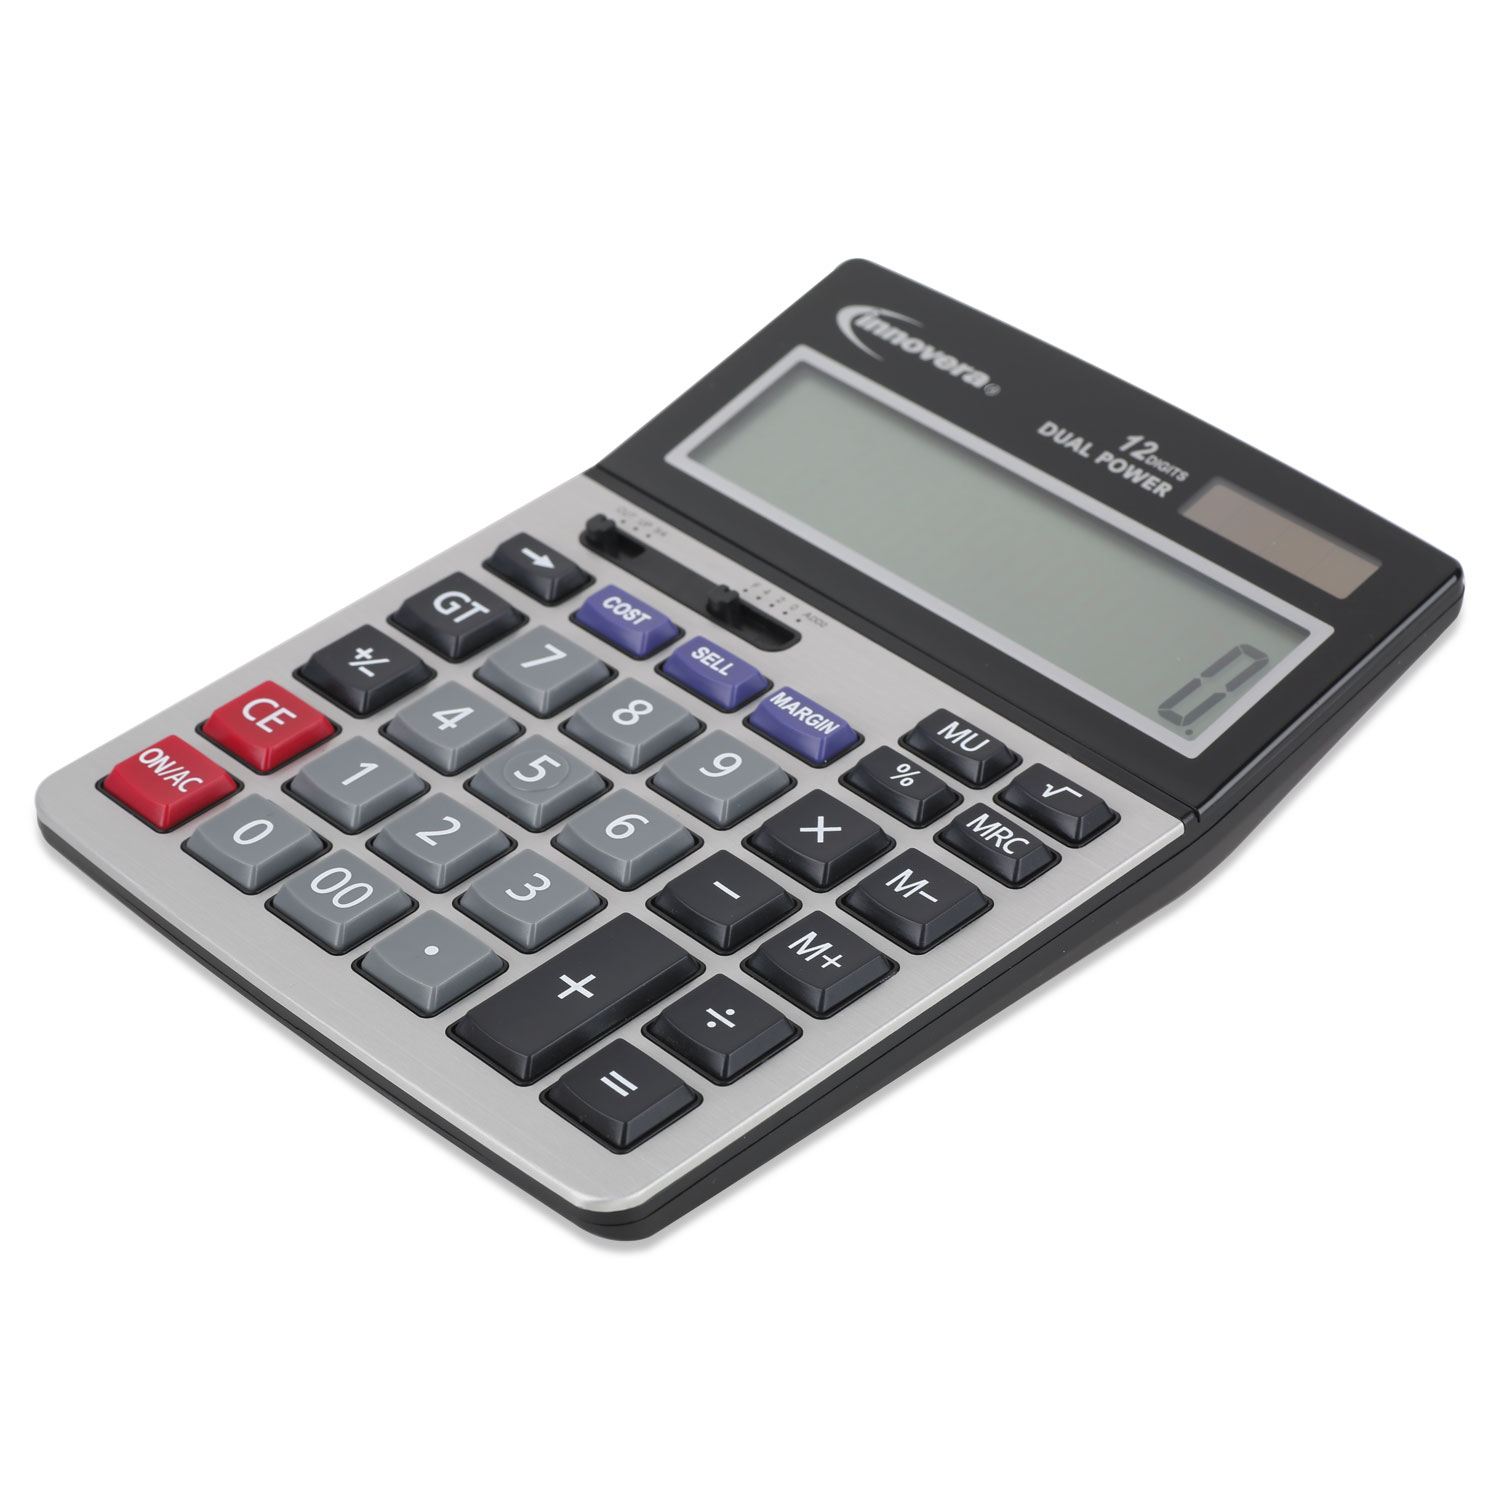 15968 Minidesk Calculator, 12-Digit LCD